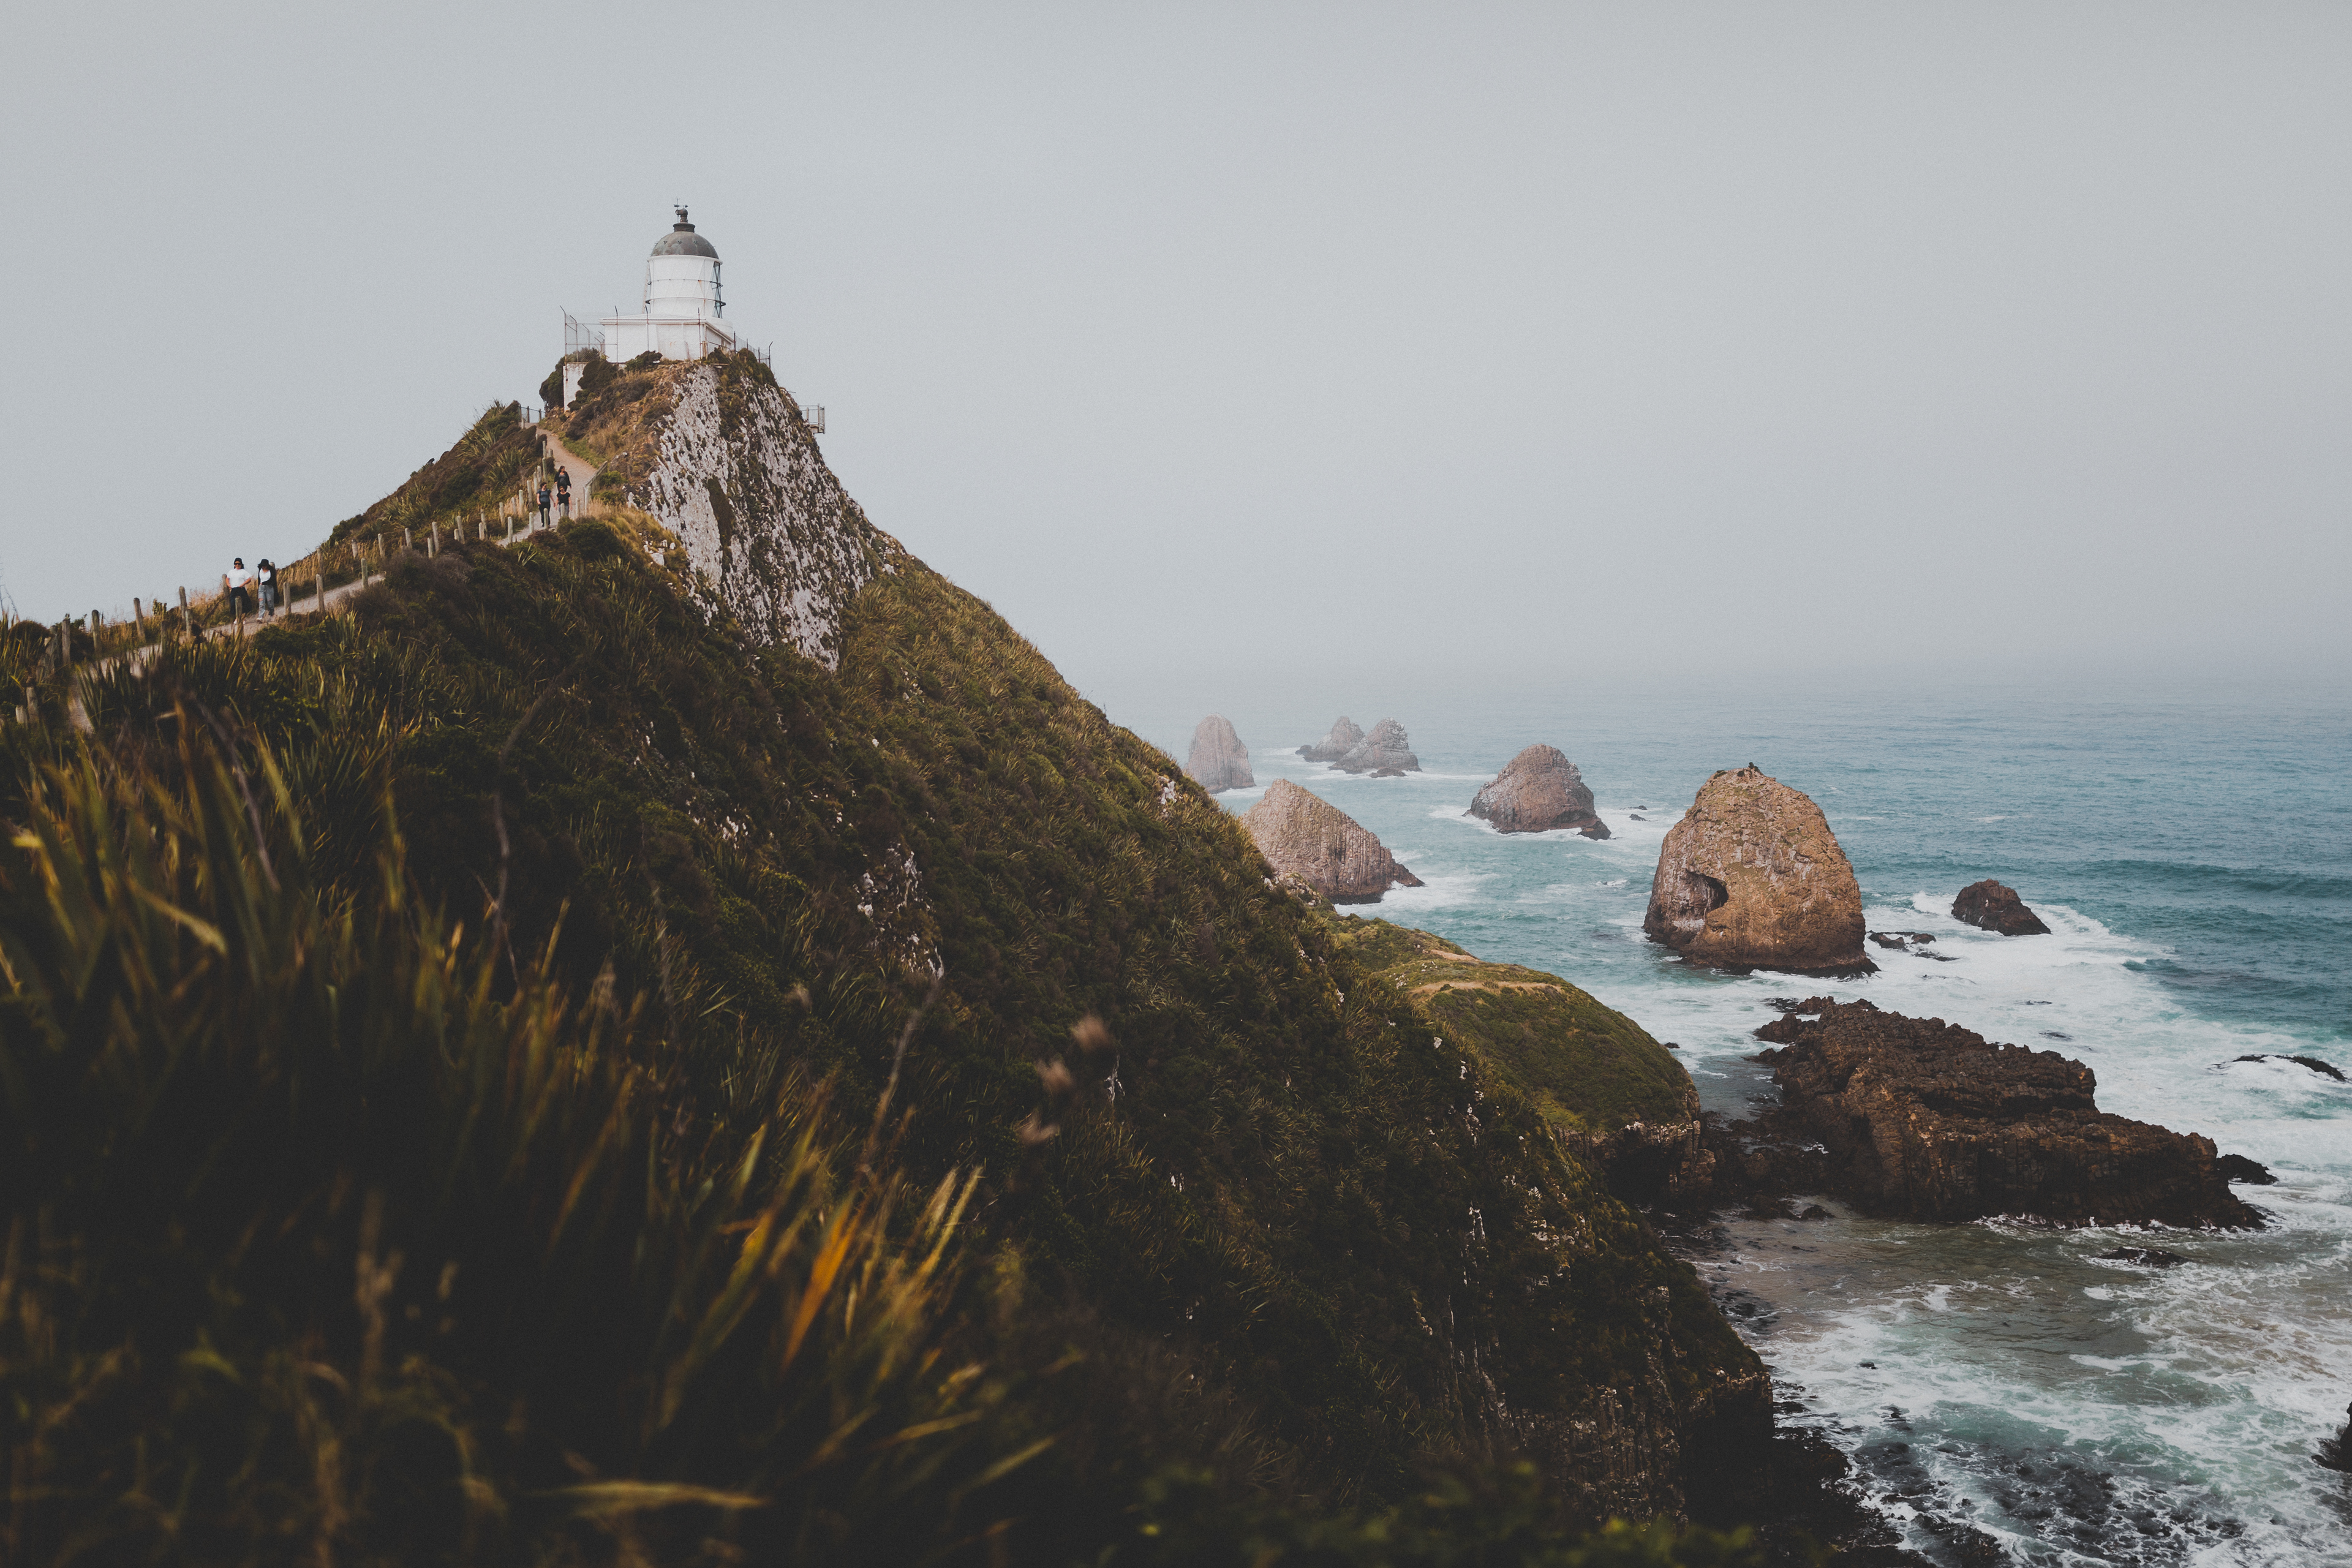 Маяк Наггет поинт. Орегон побережье туман. Castle point Lighthouse in Neuseeland. Coast like